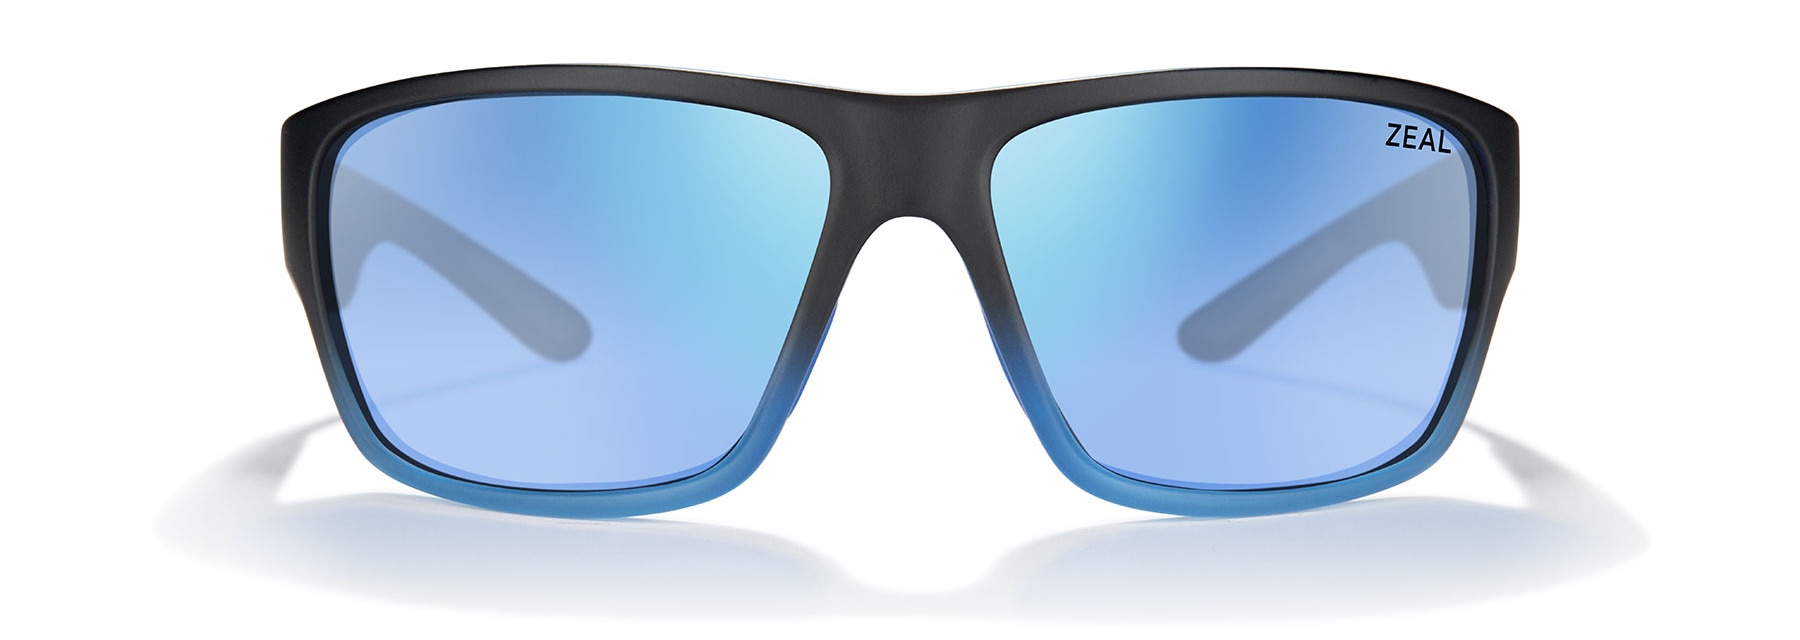 Shop DECKER (Z2690) Sunglasses by Zeal | Zeal Optics